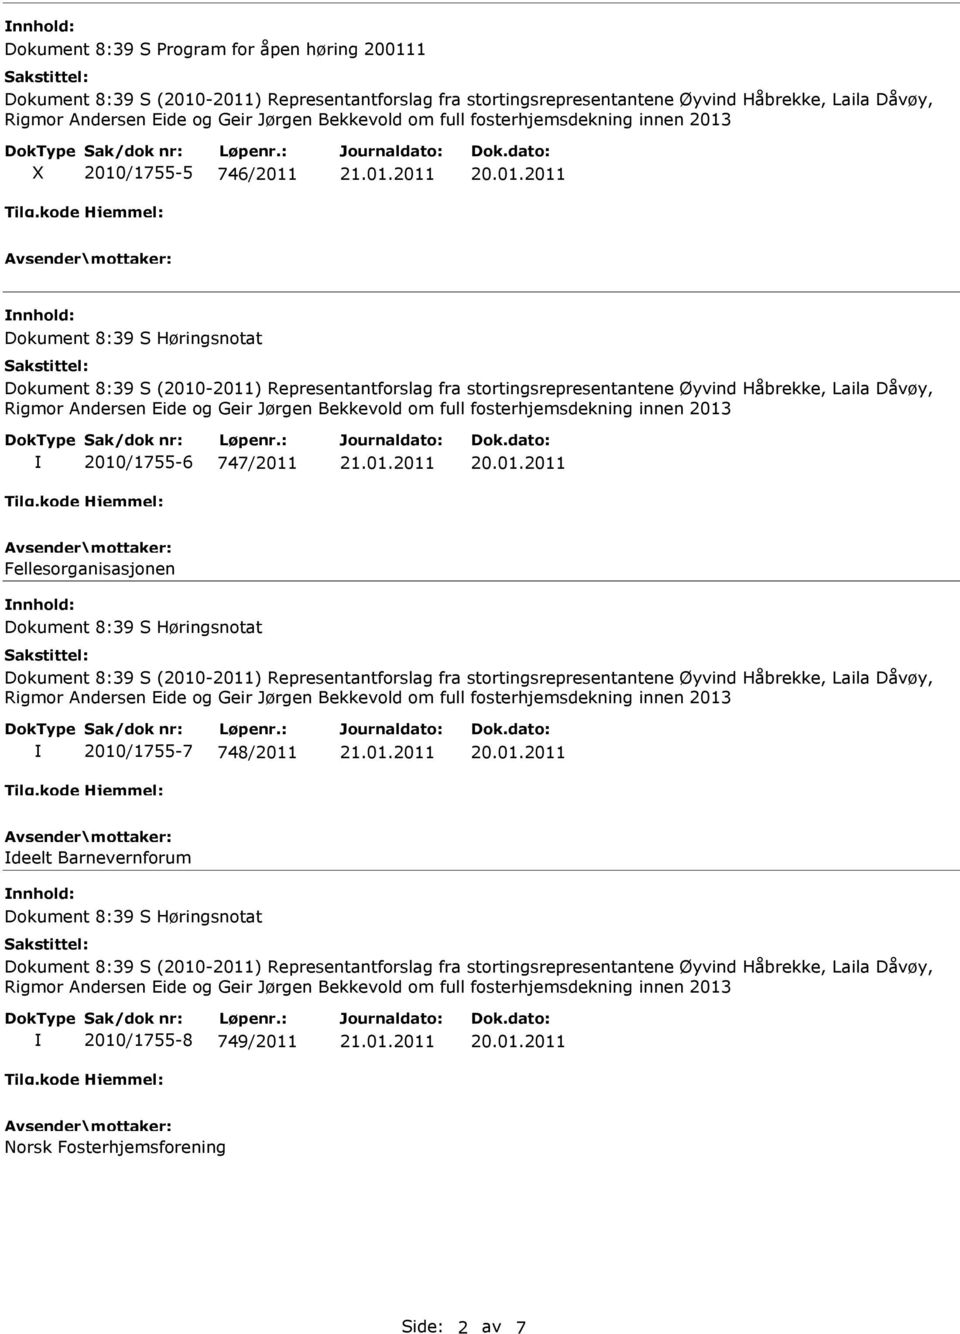 Dokument 8:39 S Høringsnotat 2010/1755-7 748/2011 deelt Barnevernforum